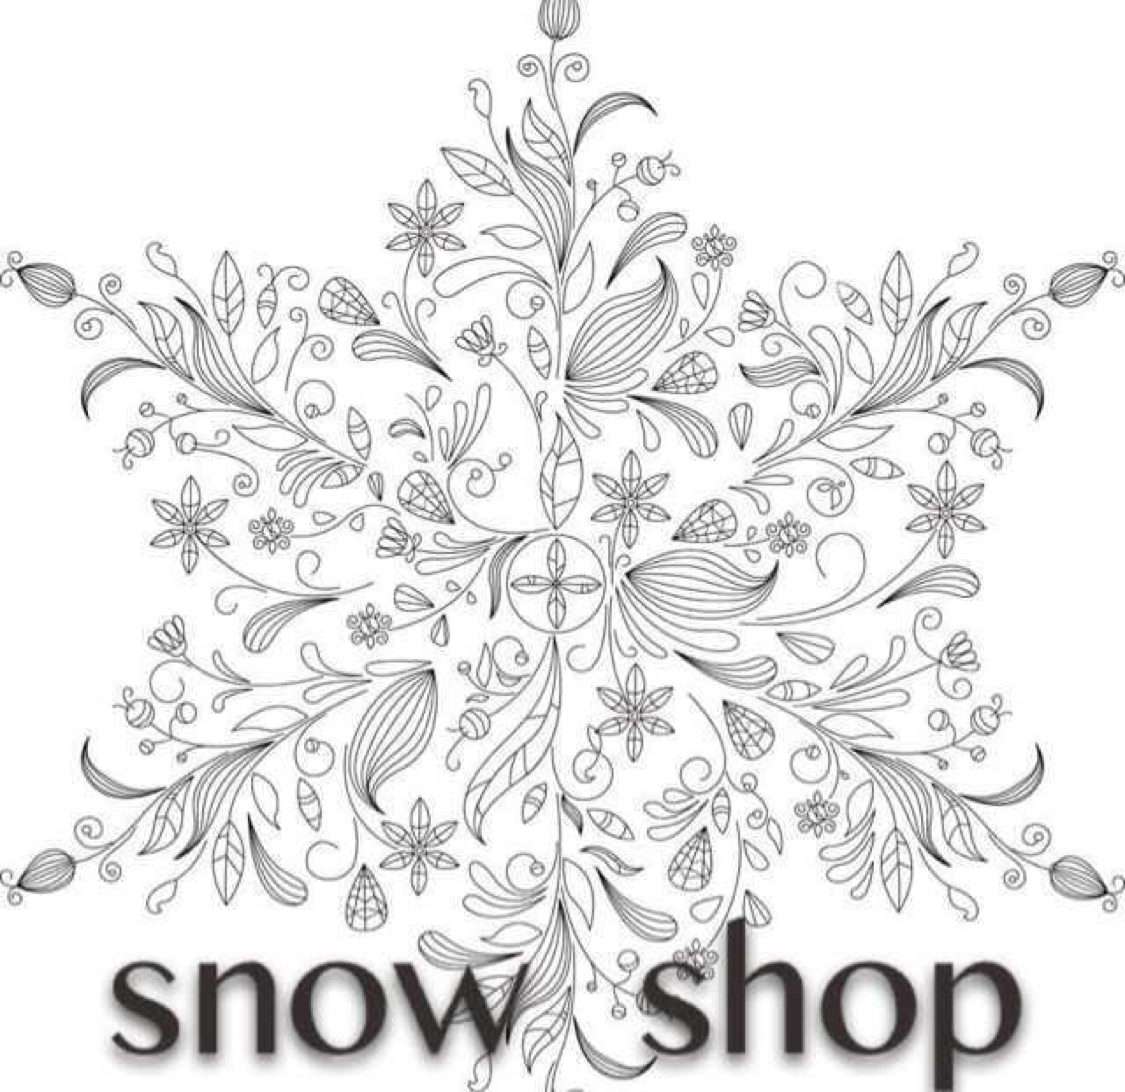 Snows Shop